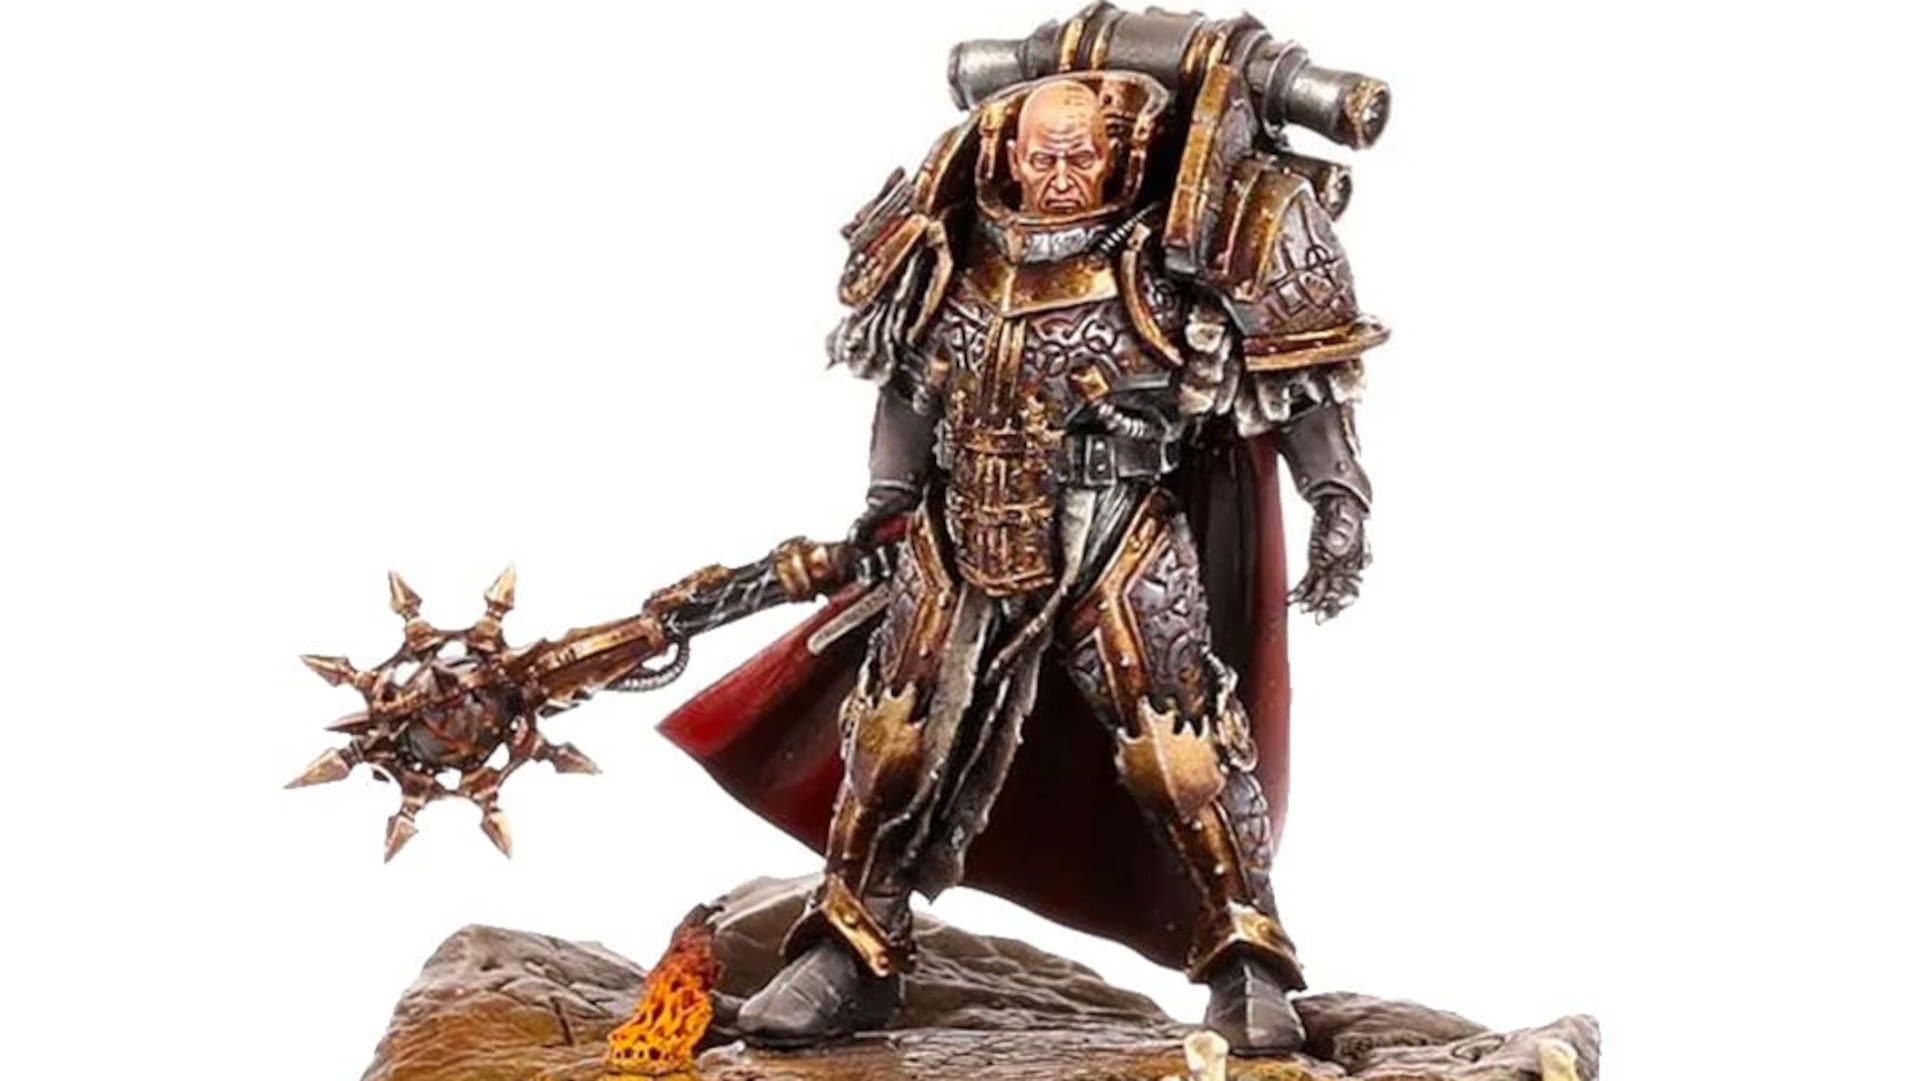 Warhammer 40k primarchs guide - Games Workshop image showing the Horus Heresy Forge World resin model of Lorgar Aurelian